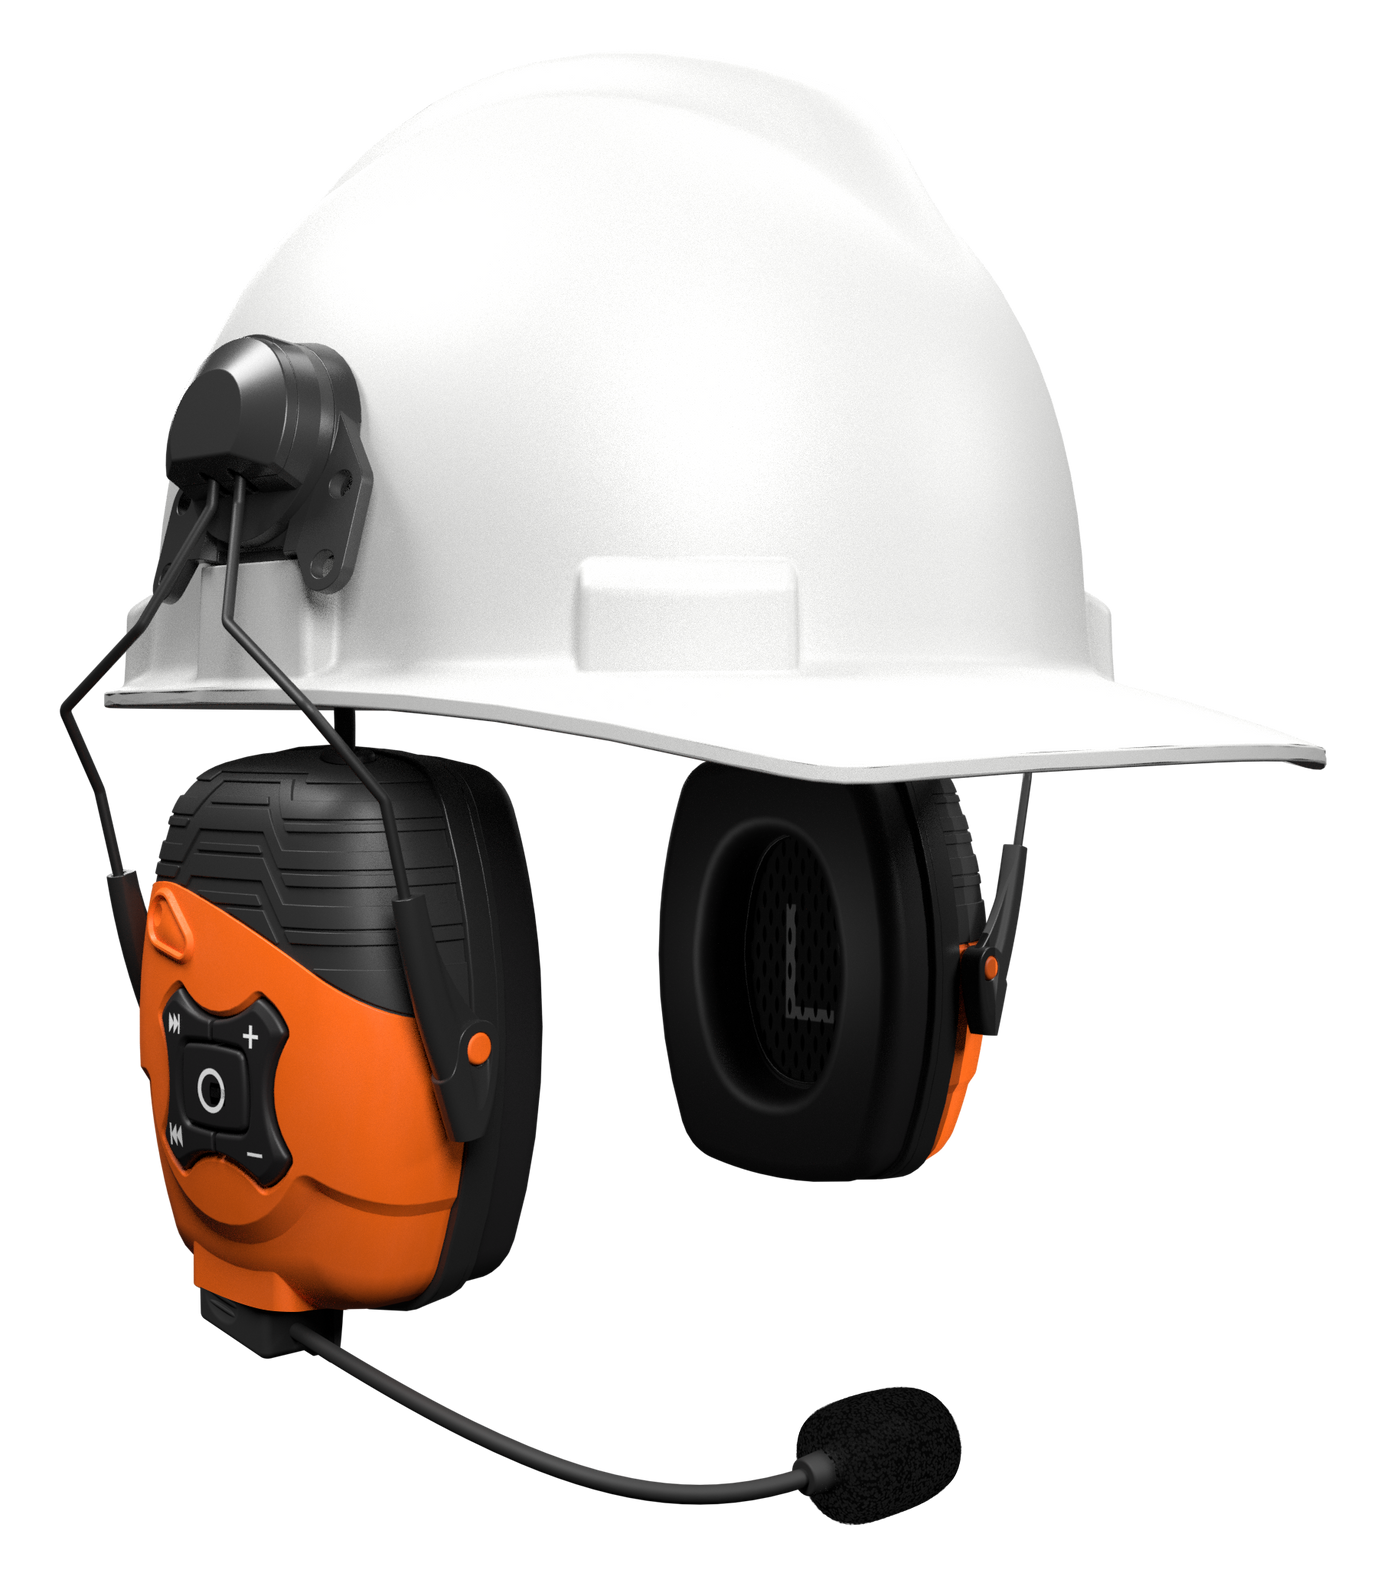 ISOtunes LINK 2 Helmet Mount Hearing Protection Features